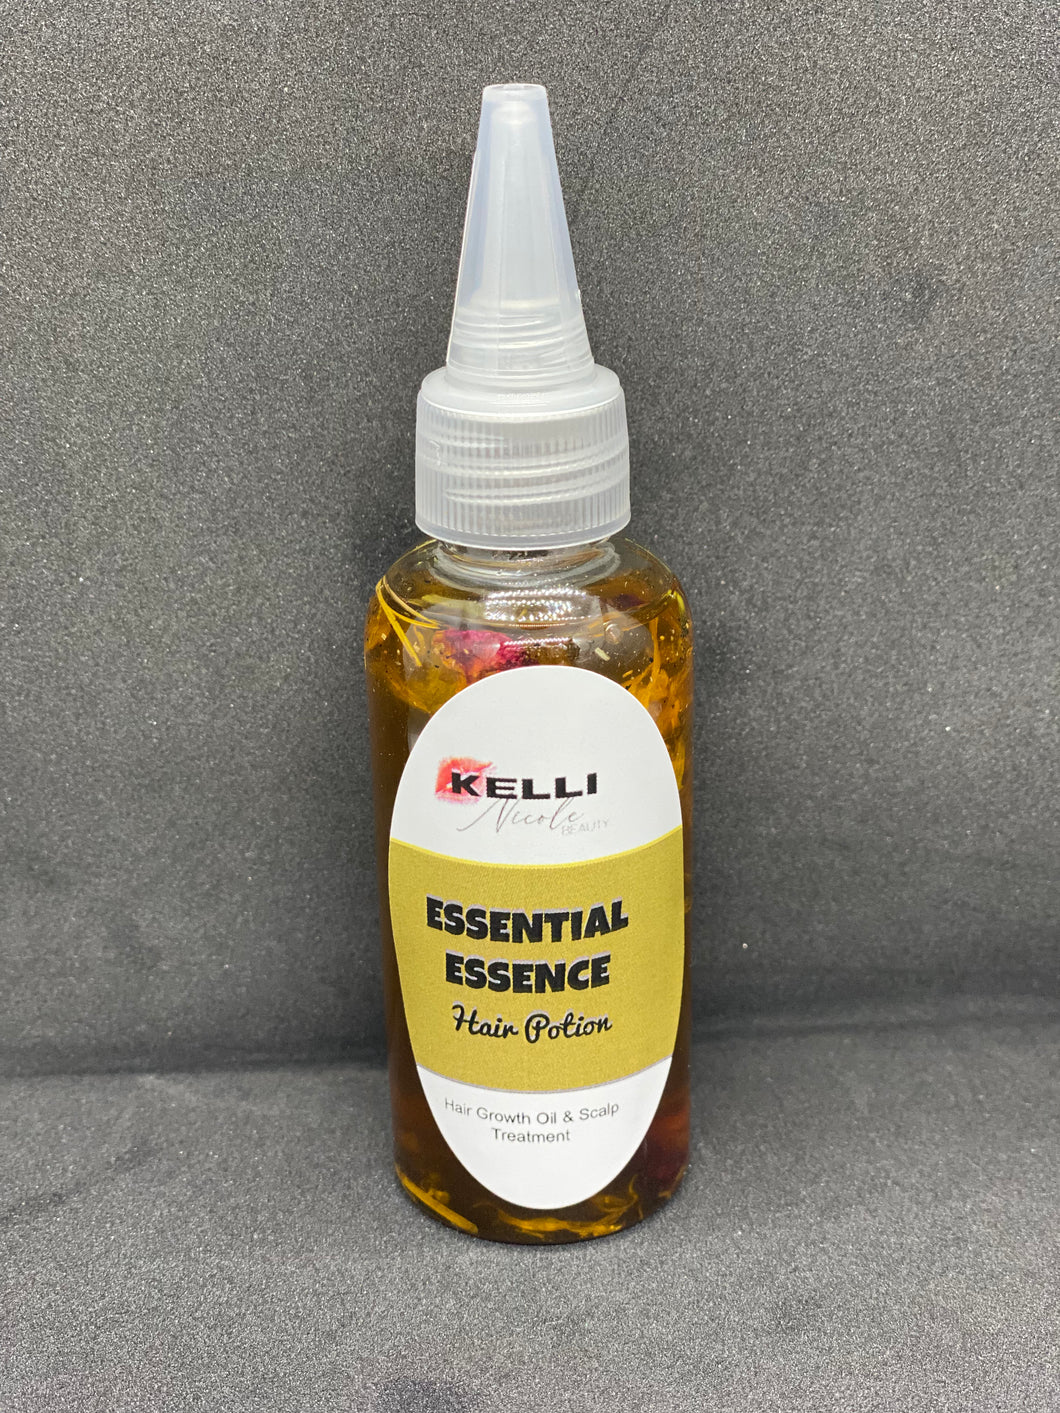 Essential Essence Hair Potion (4 oz trial size)